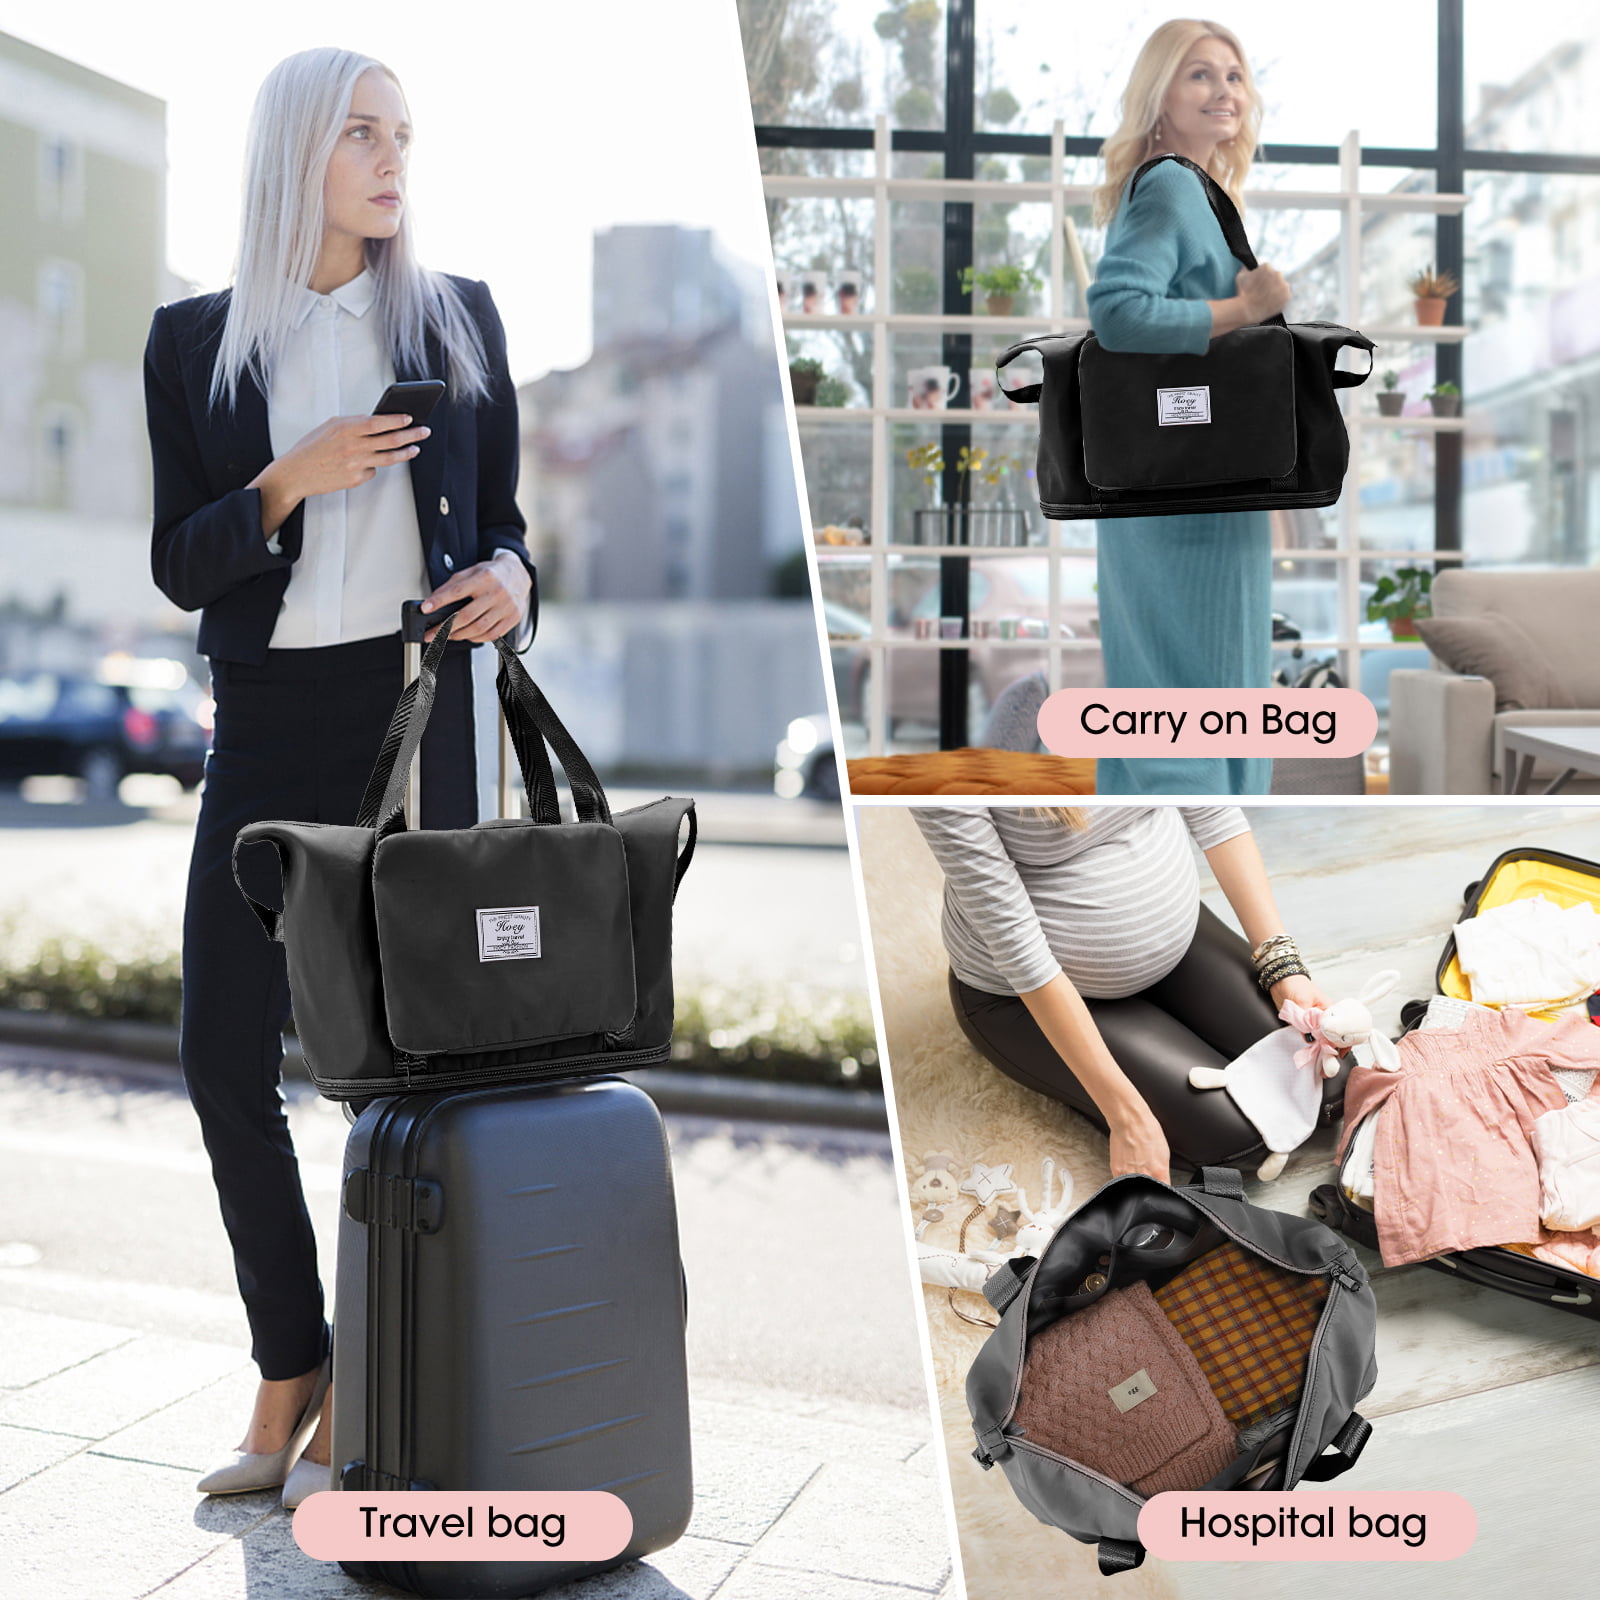 Taiuloo Travel Duffel Bag for Women, Large Expandable